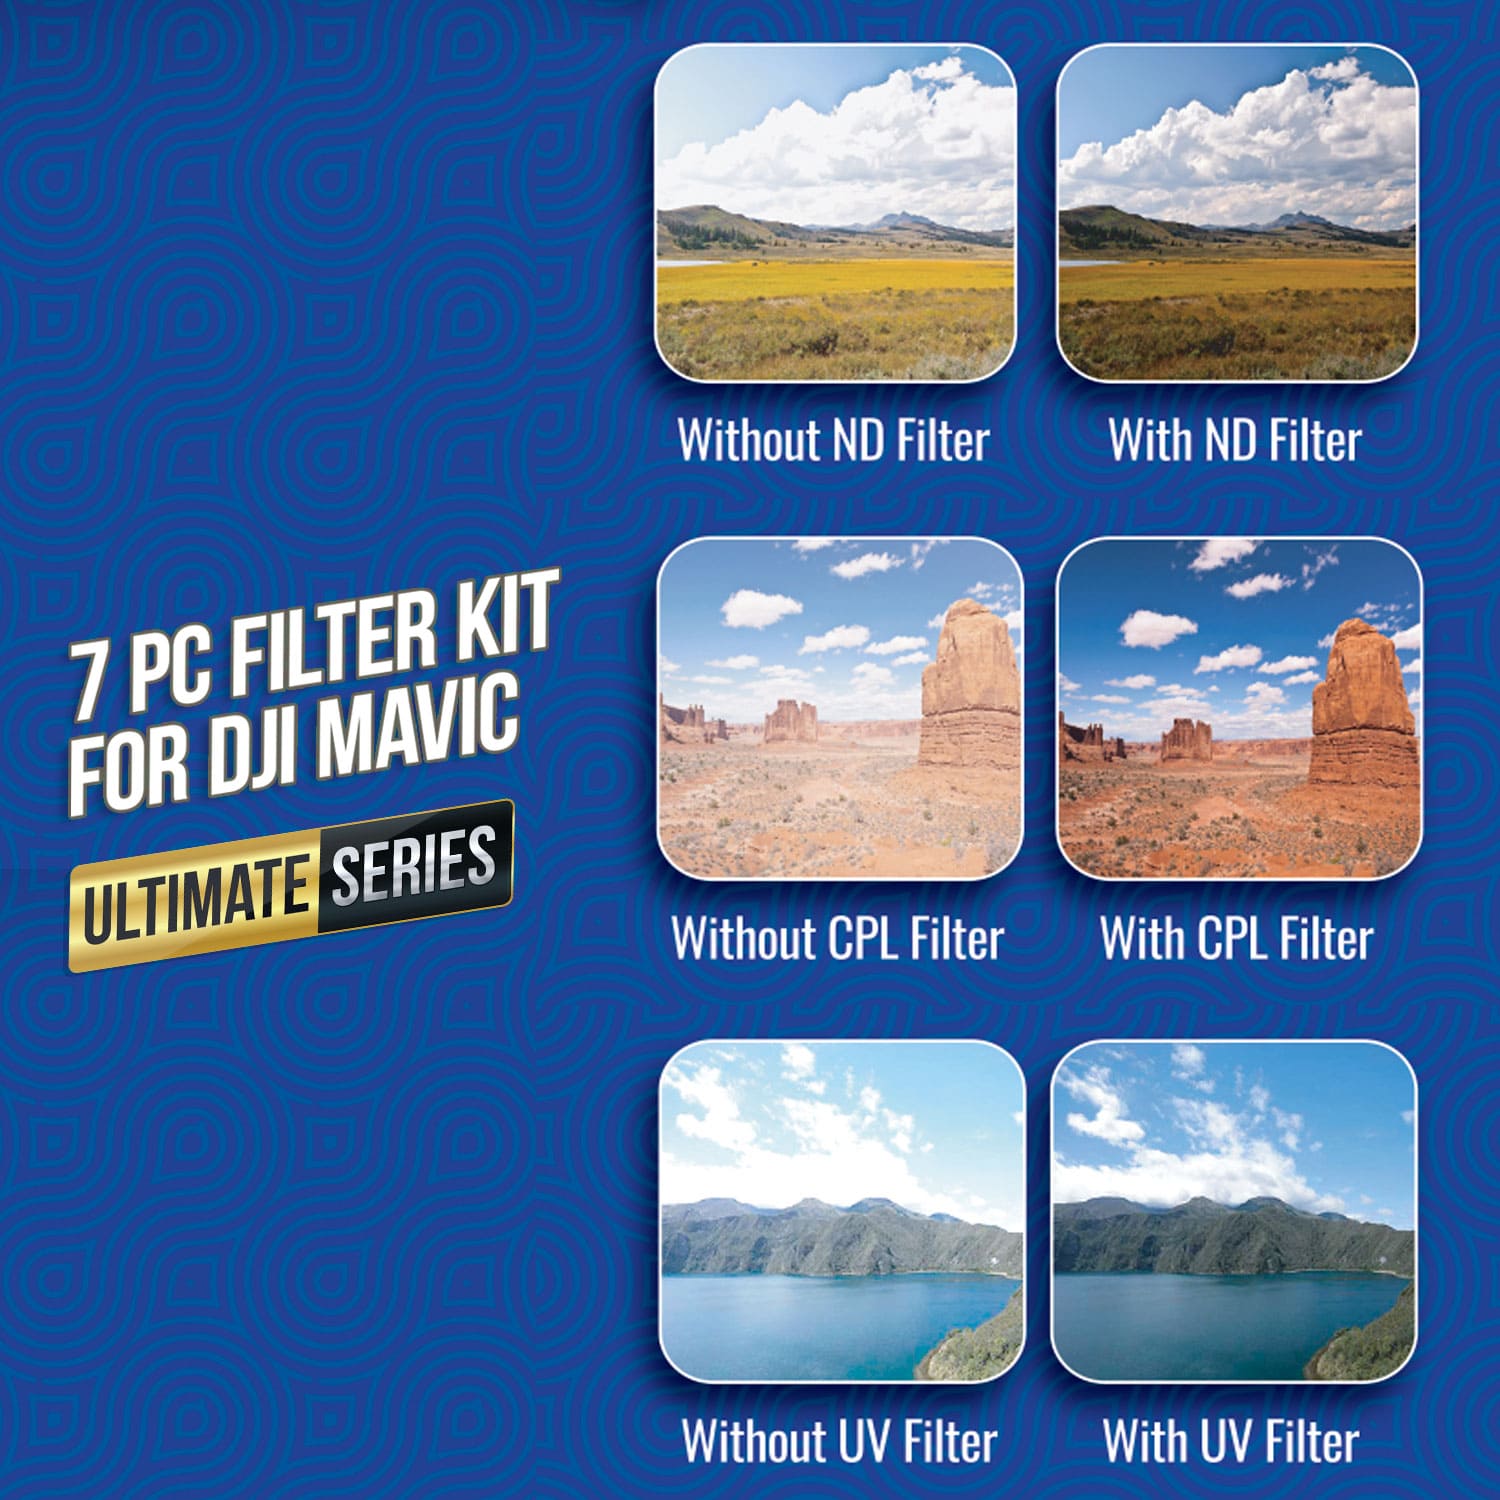 7PC Filter Kit for Dji Mavic